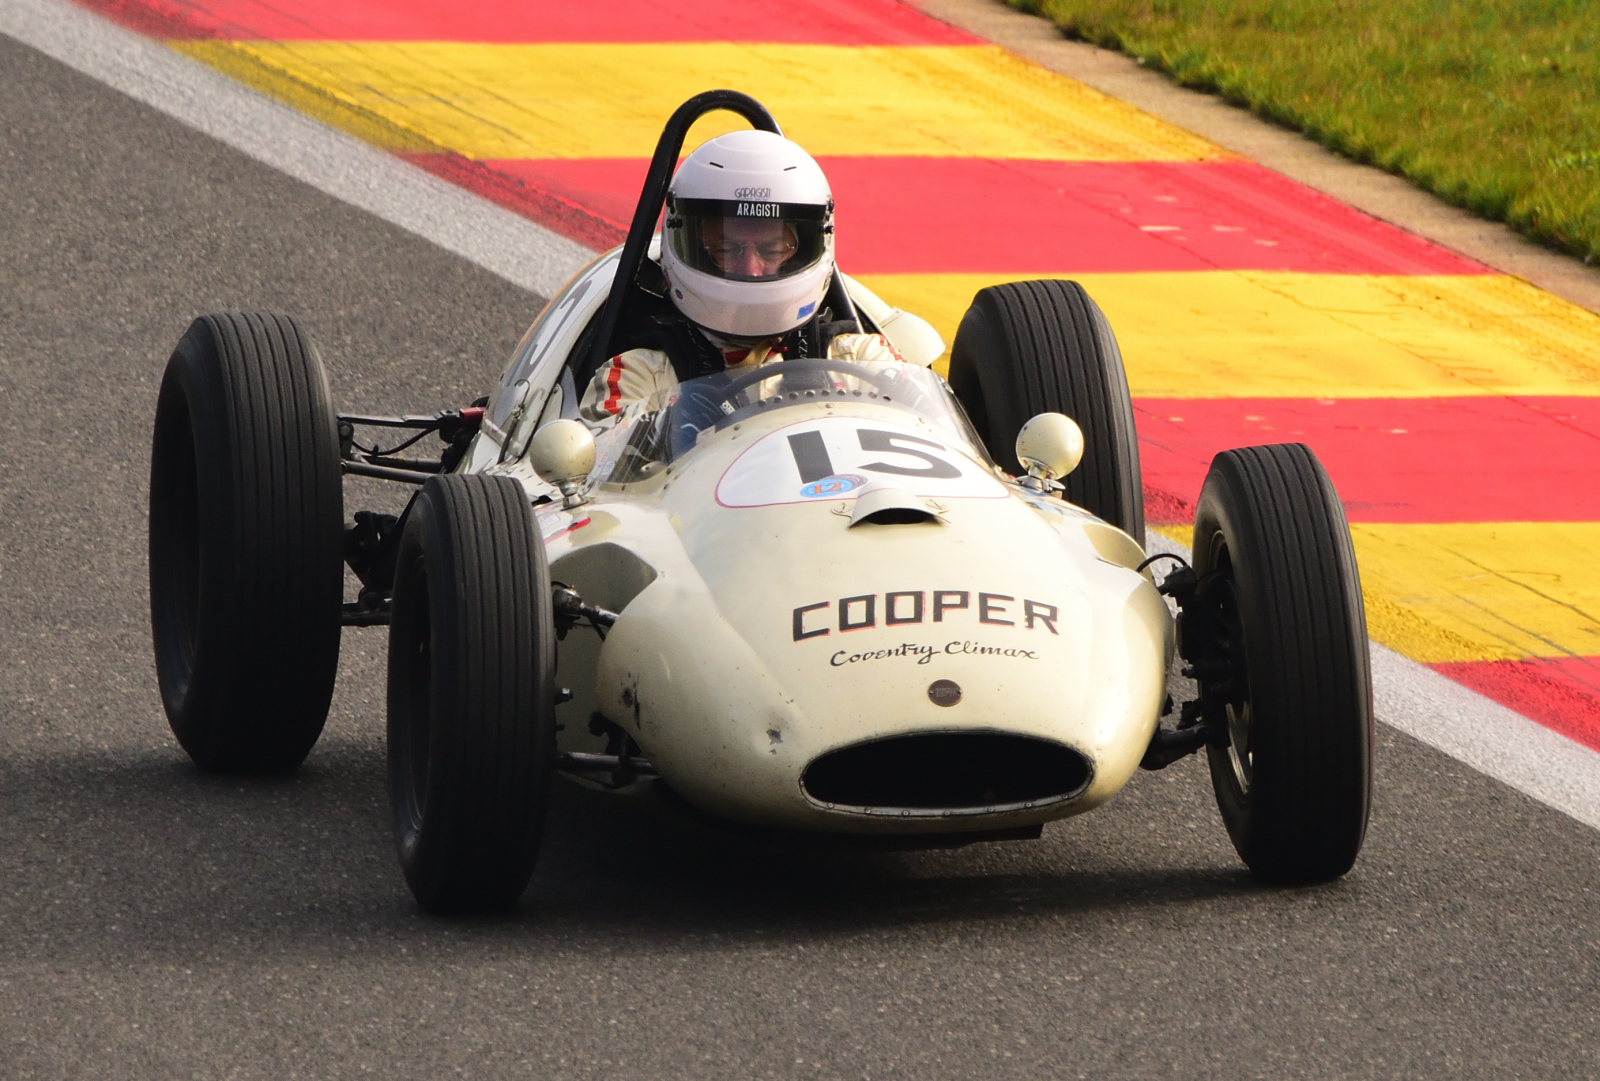 COOPER T45/51 (1960) Formel 2 Rennwagen, Fahrer: MATZELBERGER Thomas (AUT), HGPCA ~ PRE ’66 GRAND PRIX CARS. Hier beim 6h Classic Rennen am 30.09.2023 Rahmenprogramm in Spa Francorchamps,